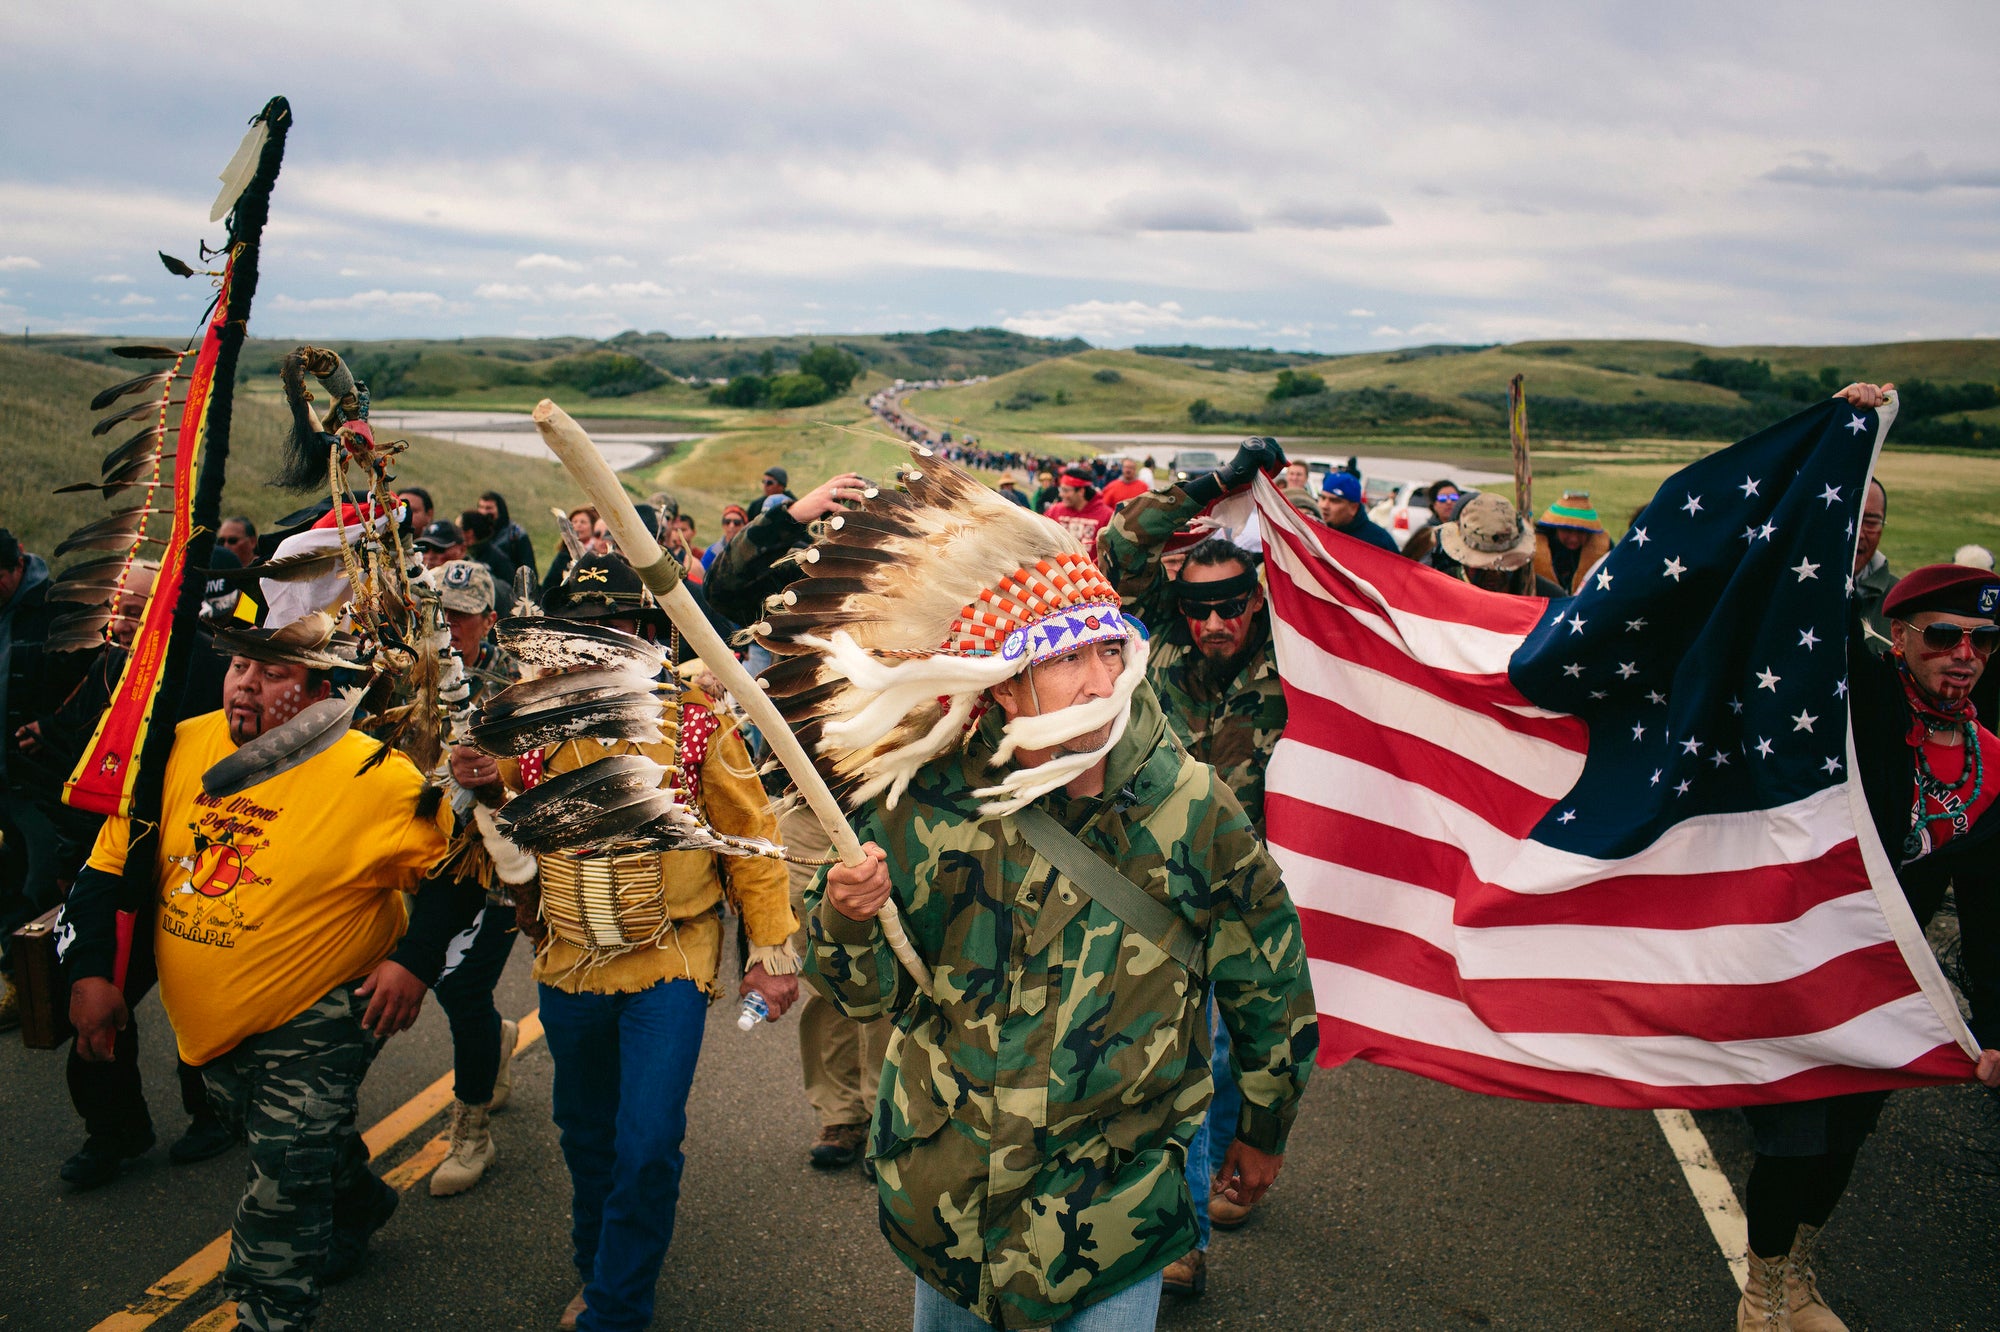 Gathering in opposition to Dakota Access Pipeline